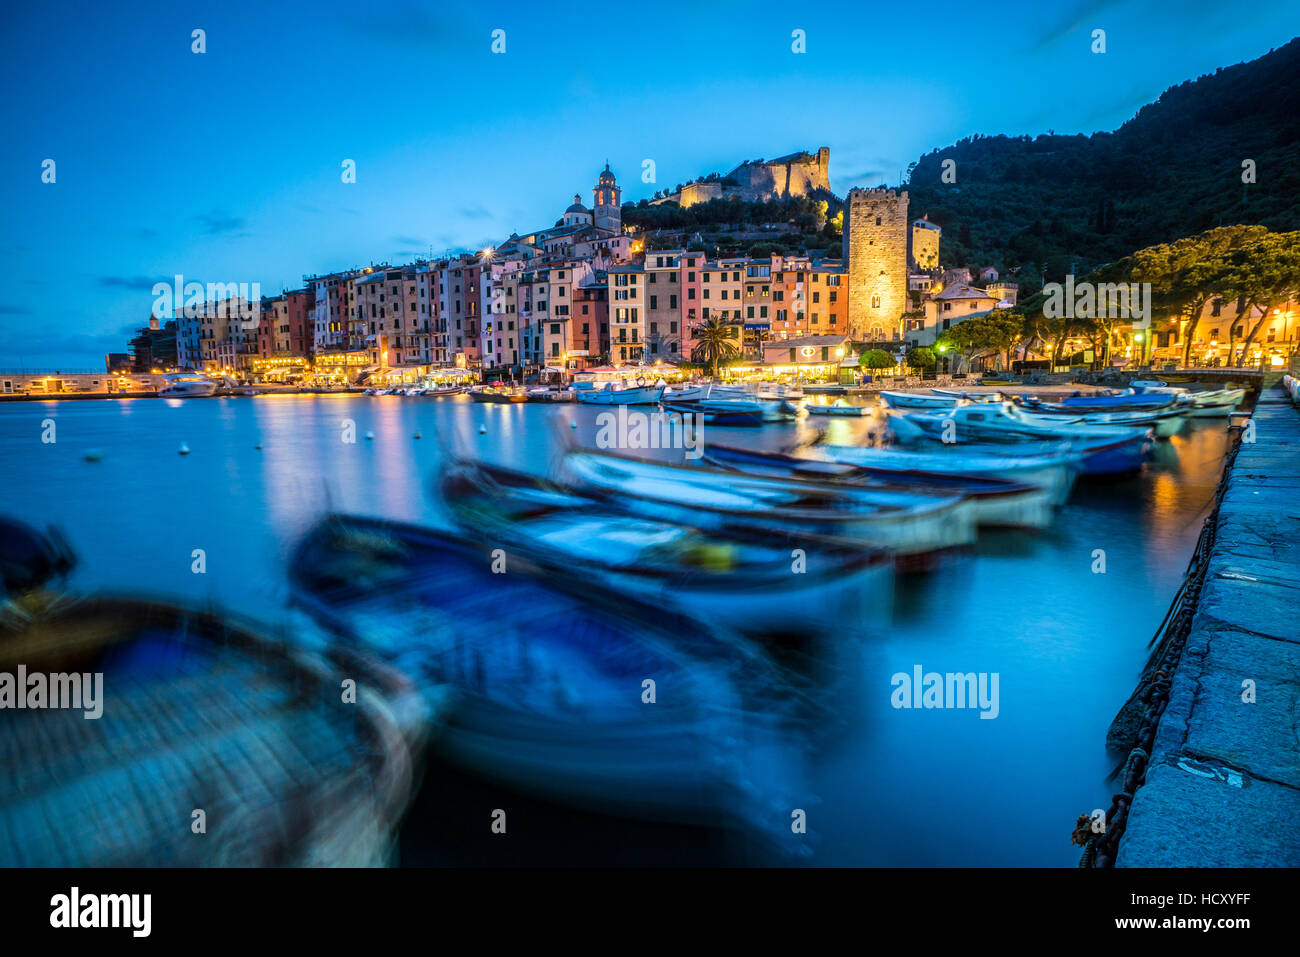 View of blue sea and boats surrounding the colorful village at dusk, Portovenere, UNESCO, La Spezia Province, Liguria, Italy Stock Photo